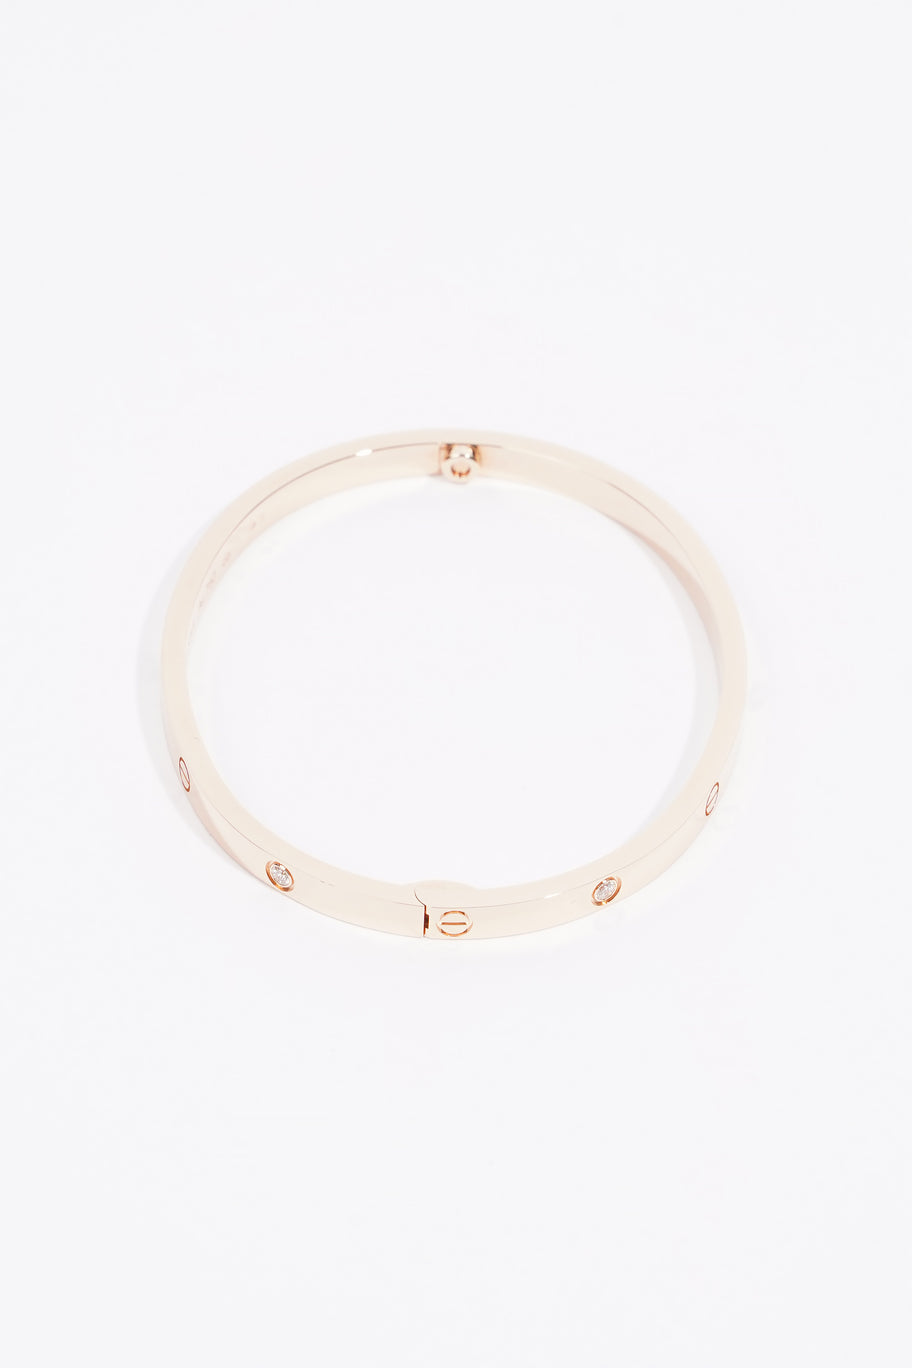 LOVE Bracelet, Small Model, 6 Diamonds Rose Gold Rose Gold 16cm Image 5